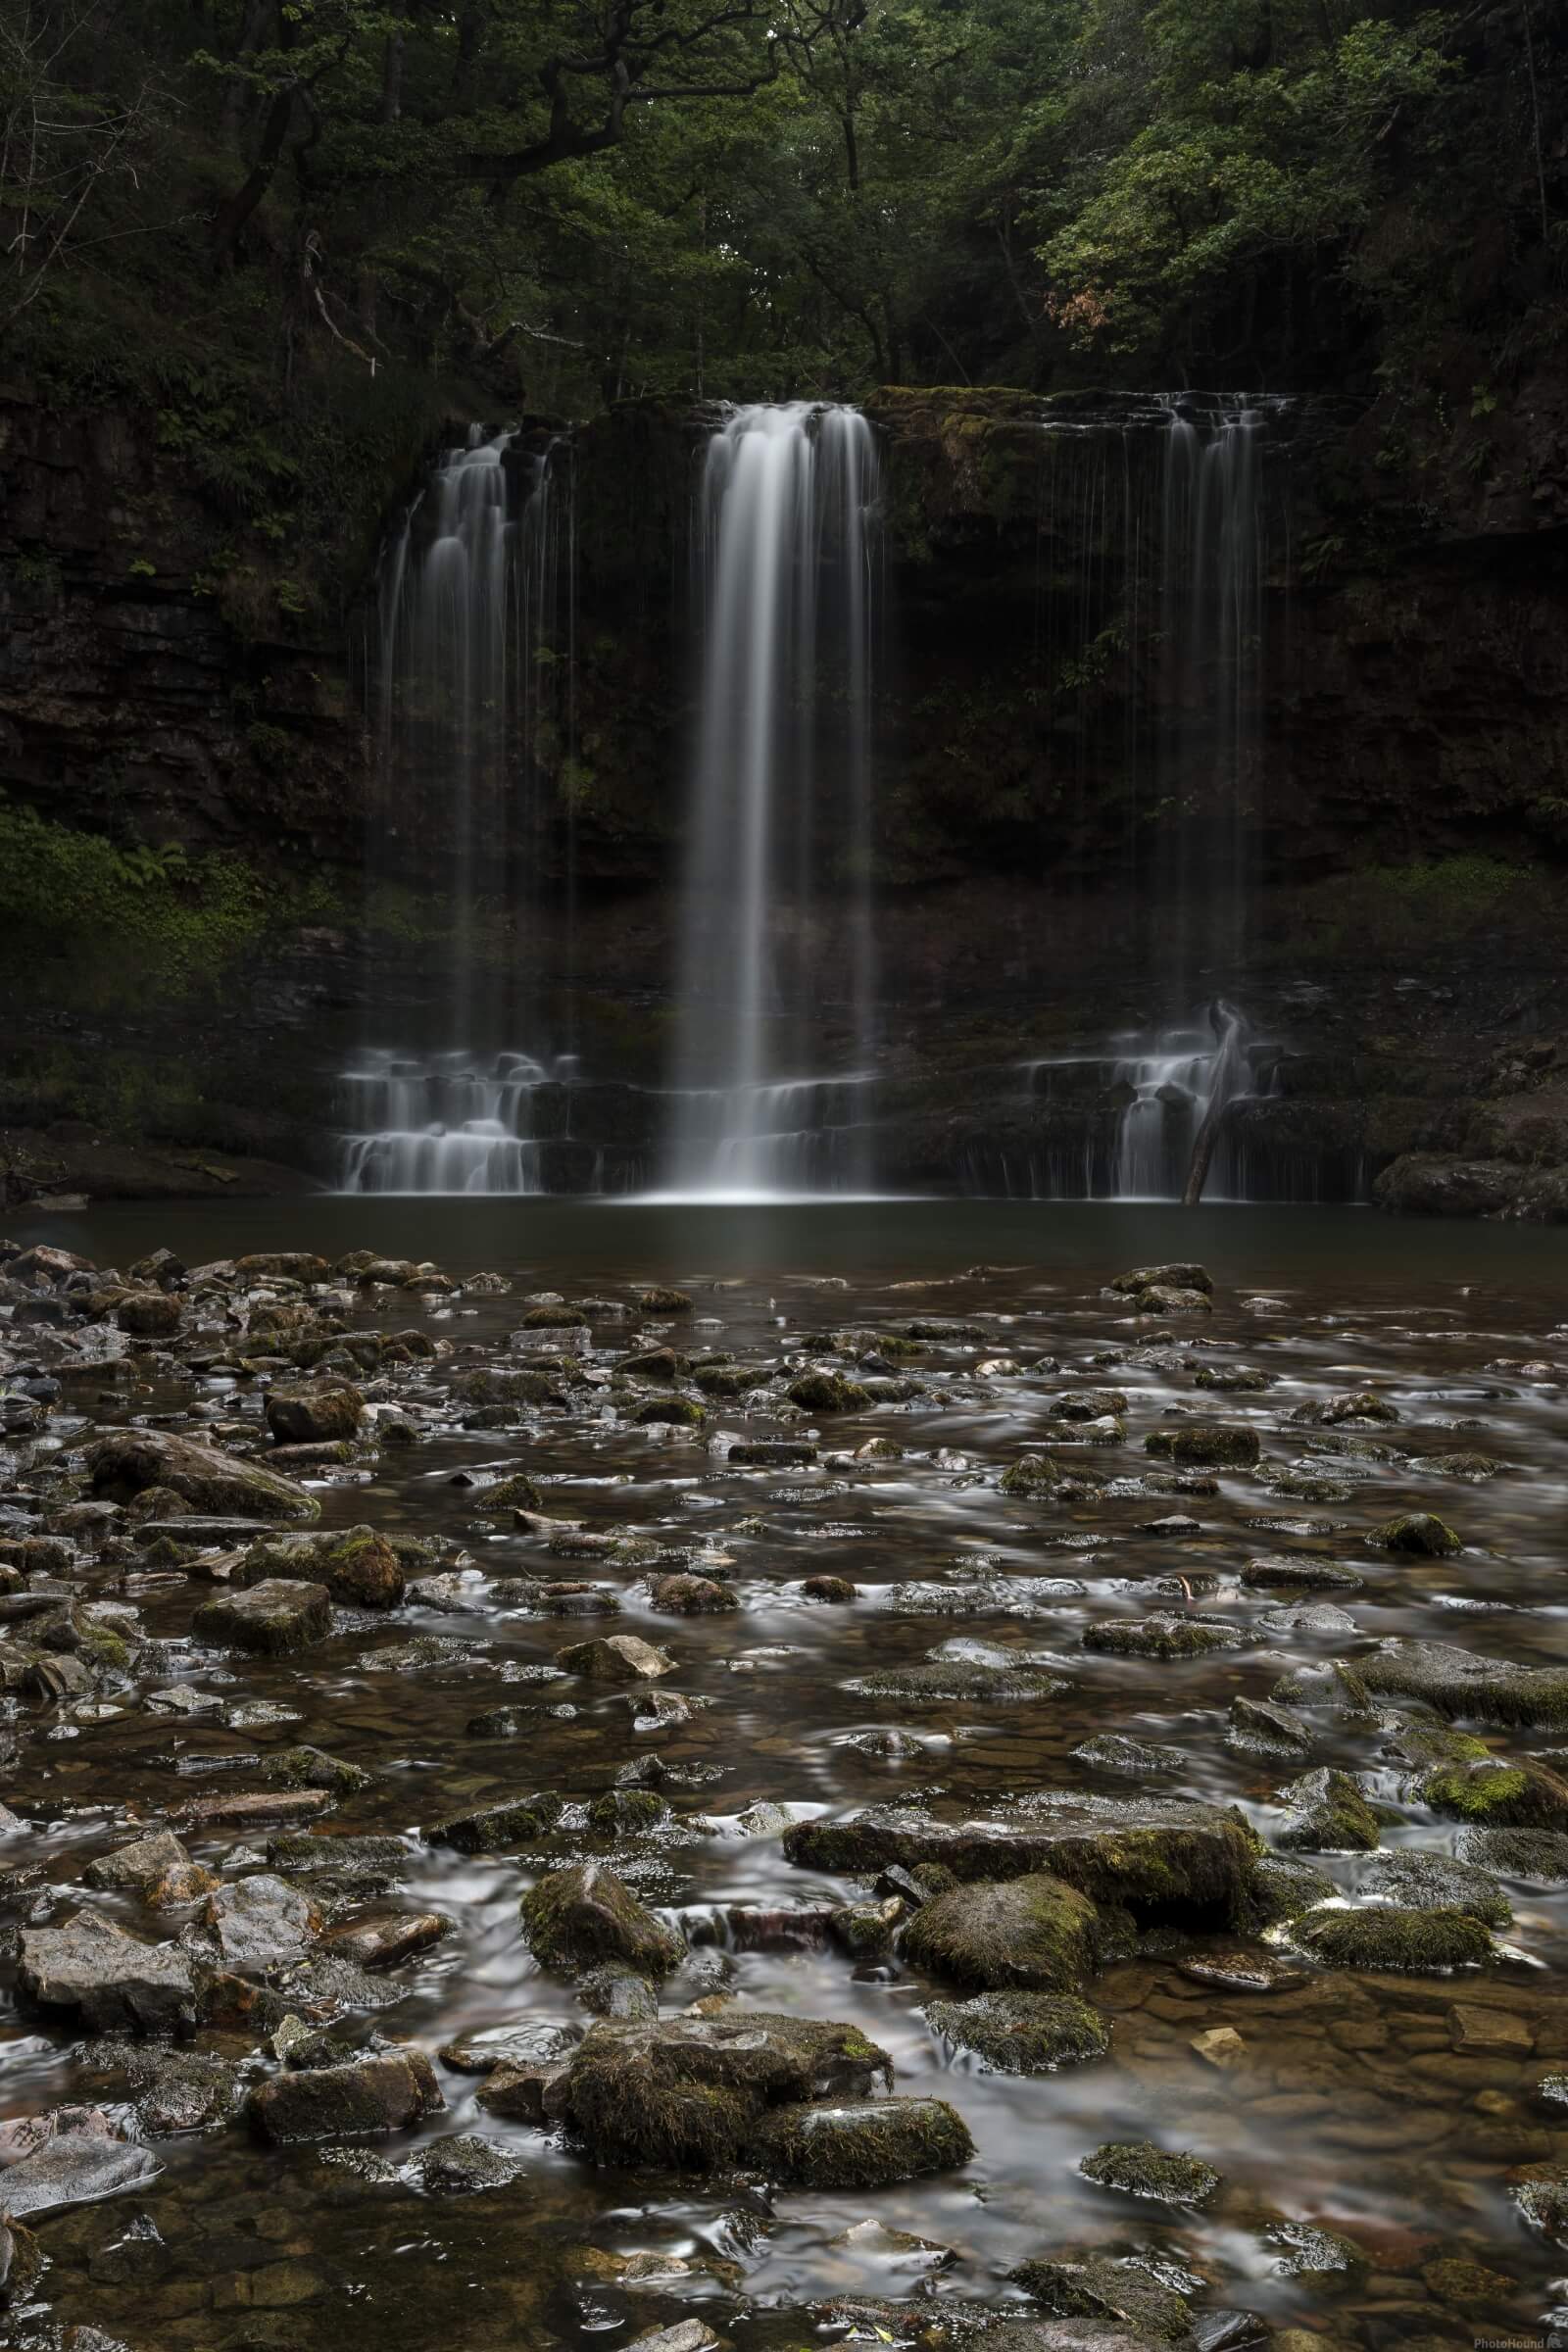 Image of Four Falls by Matt Holland